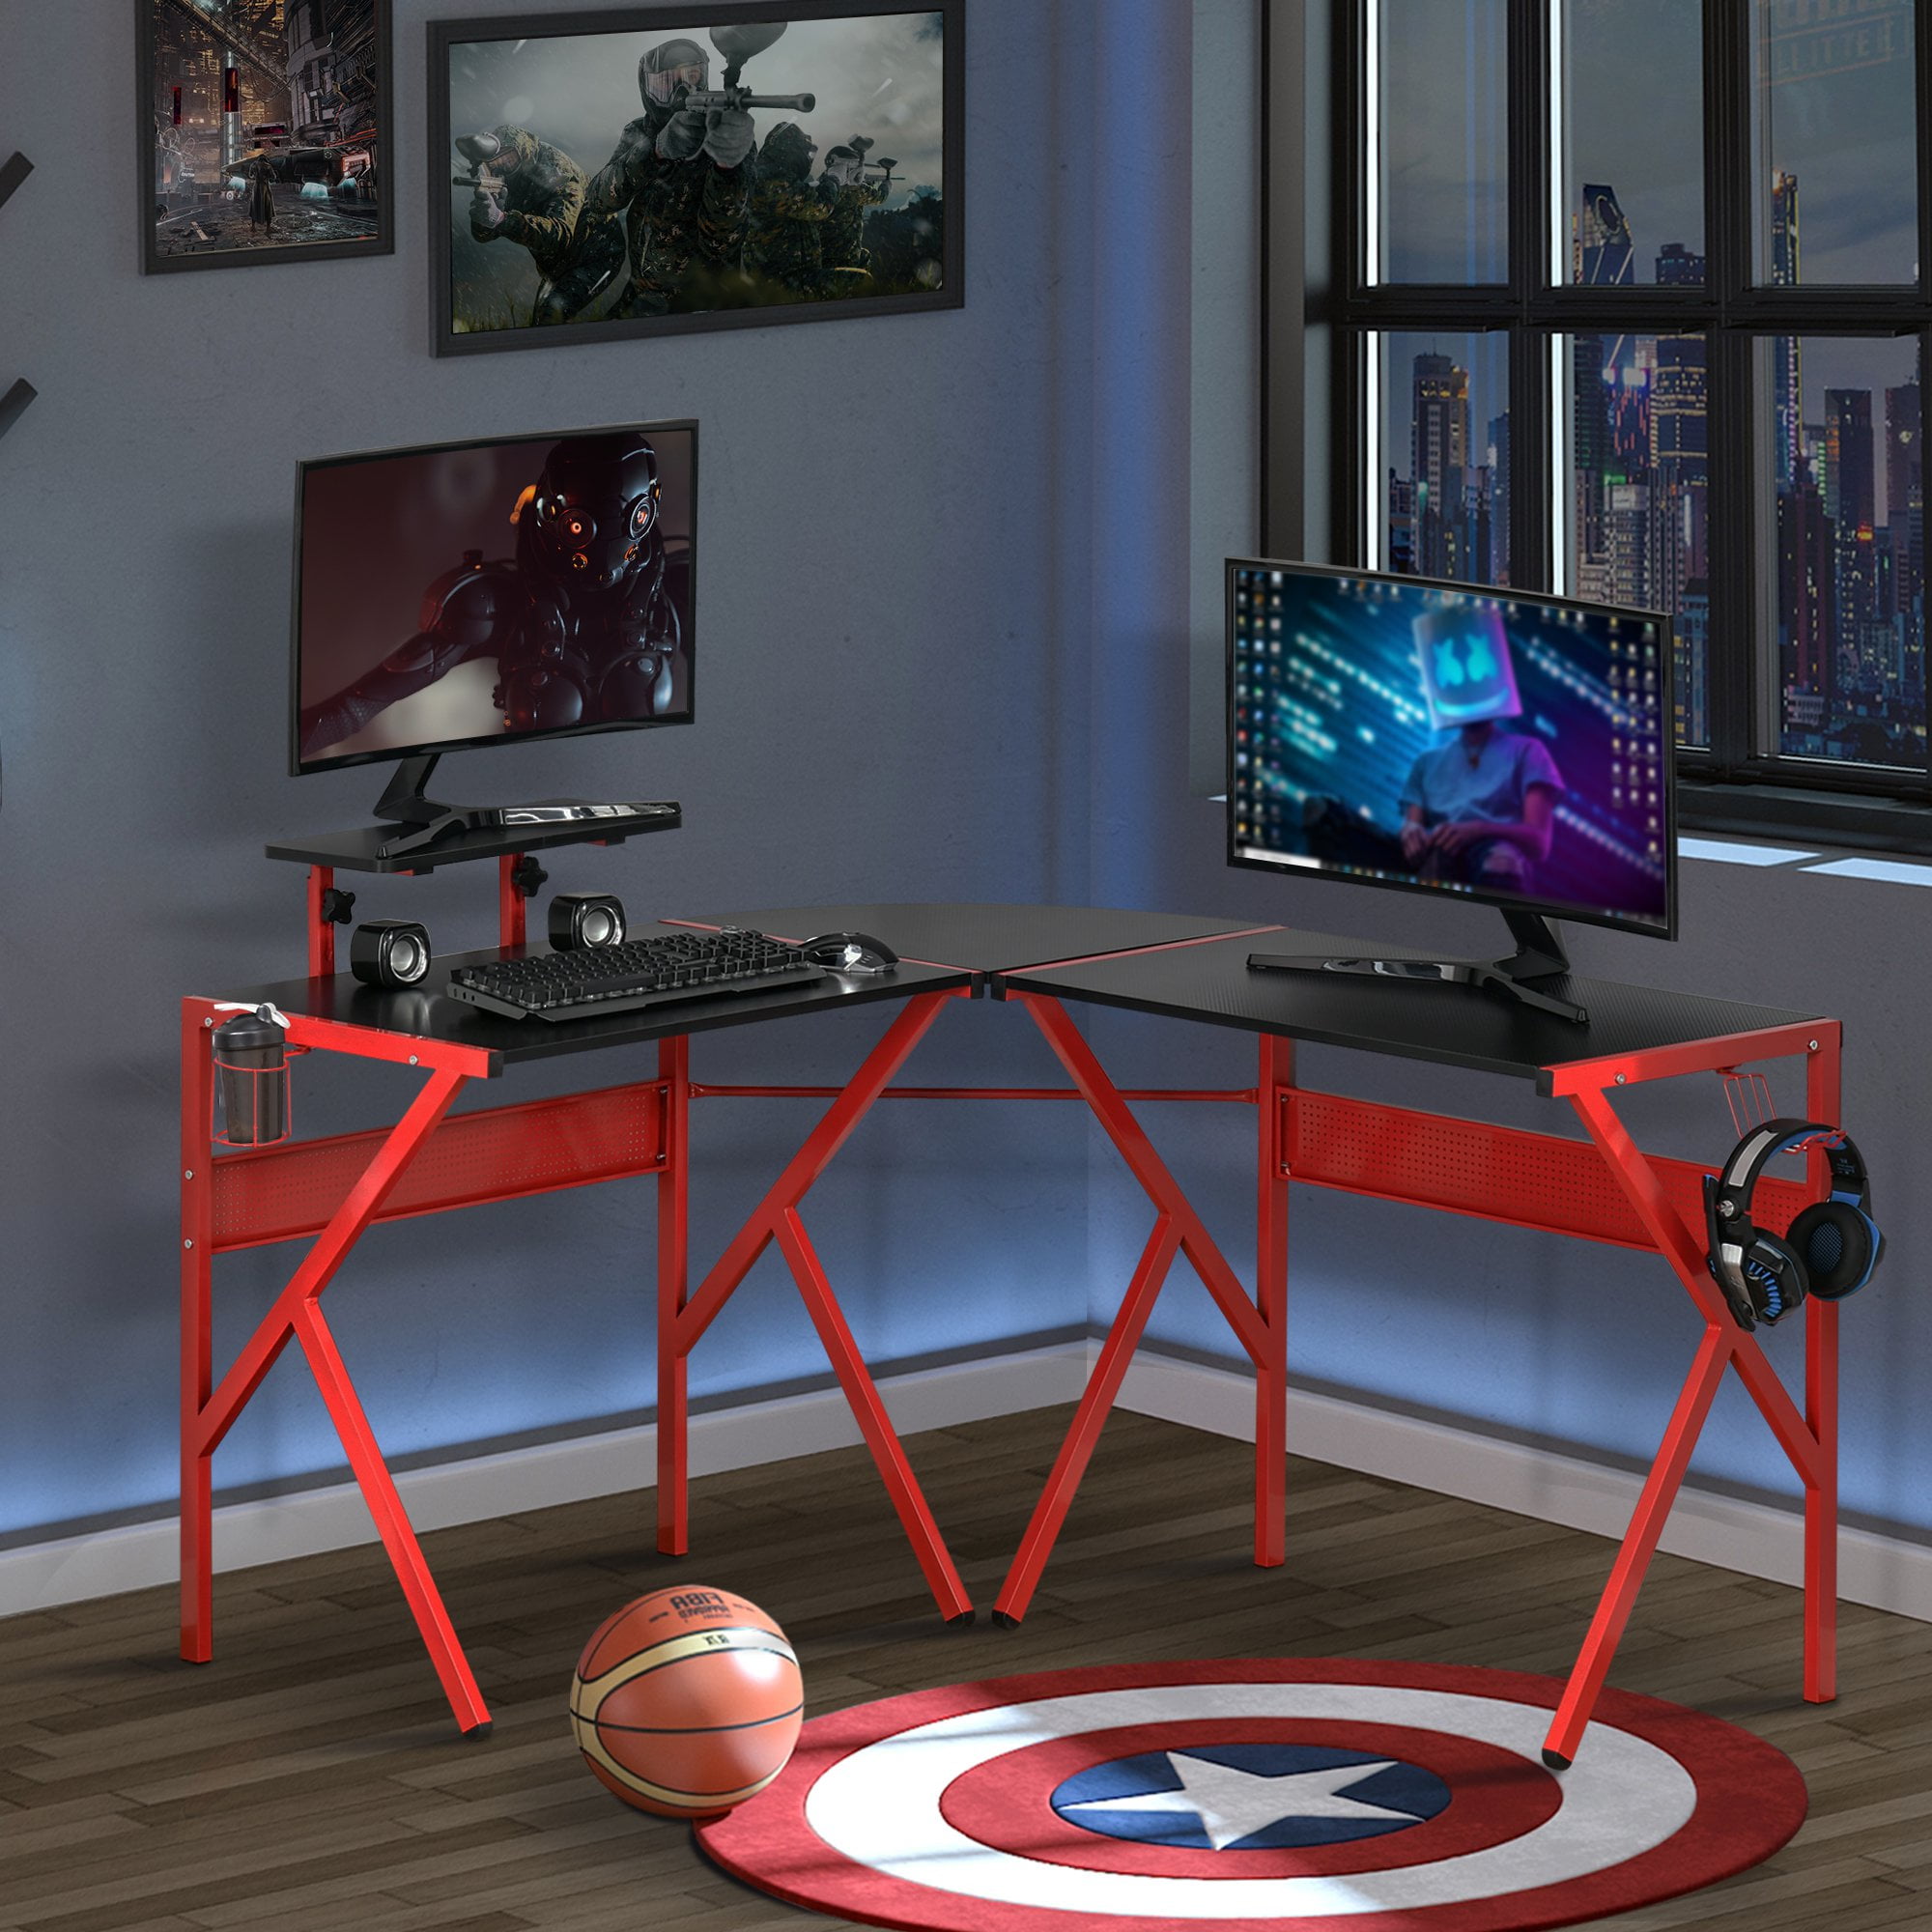 Details about   45.2'' Ergonomic Gaming Desk Shaped Computer Desk with Cup Holder 